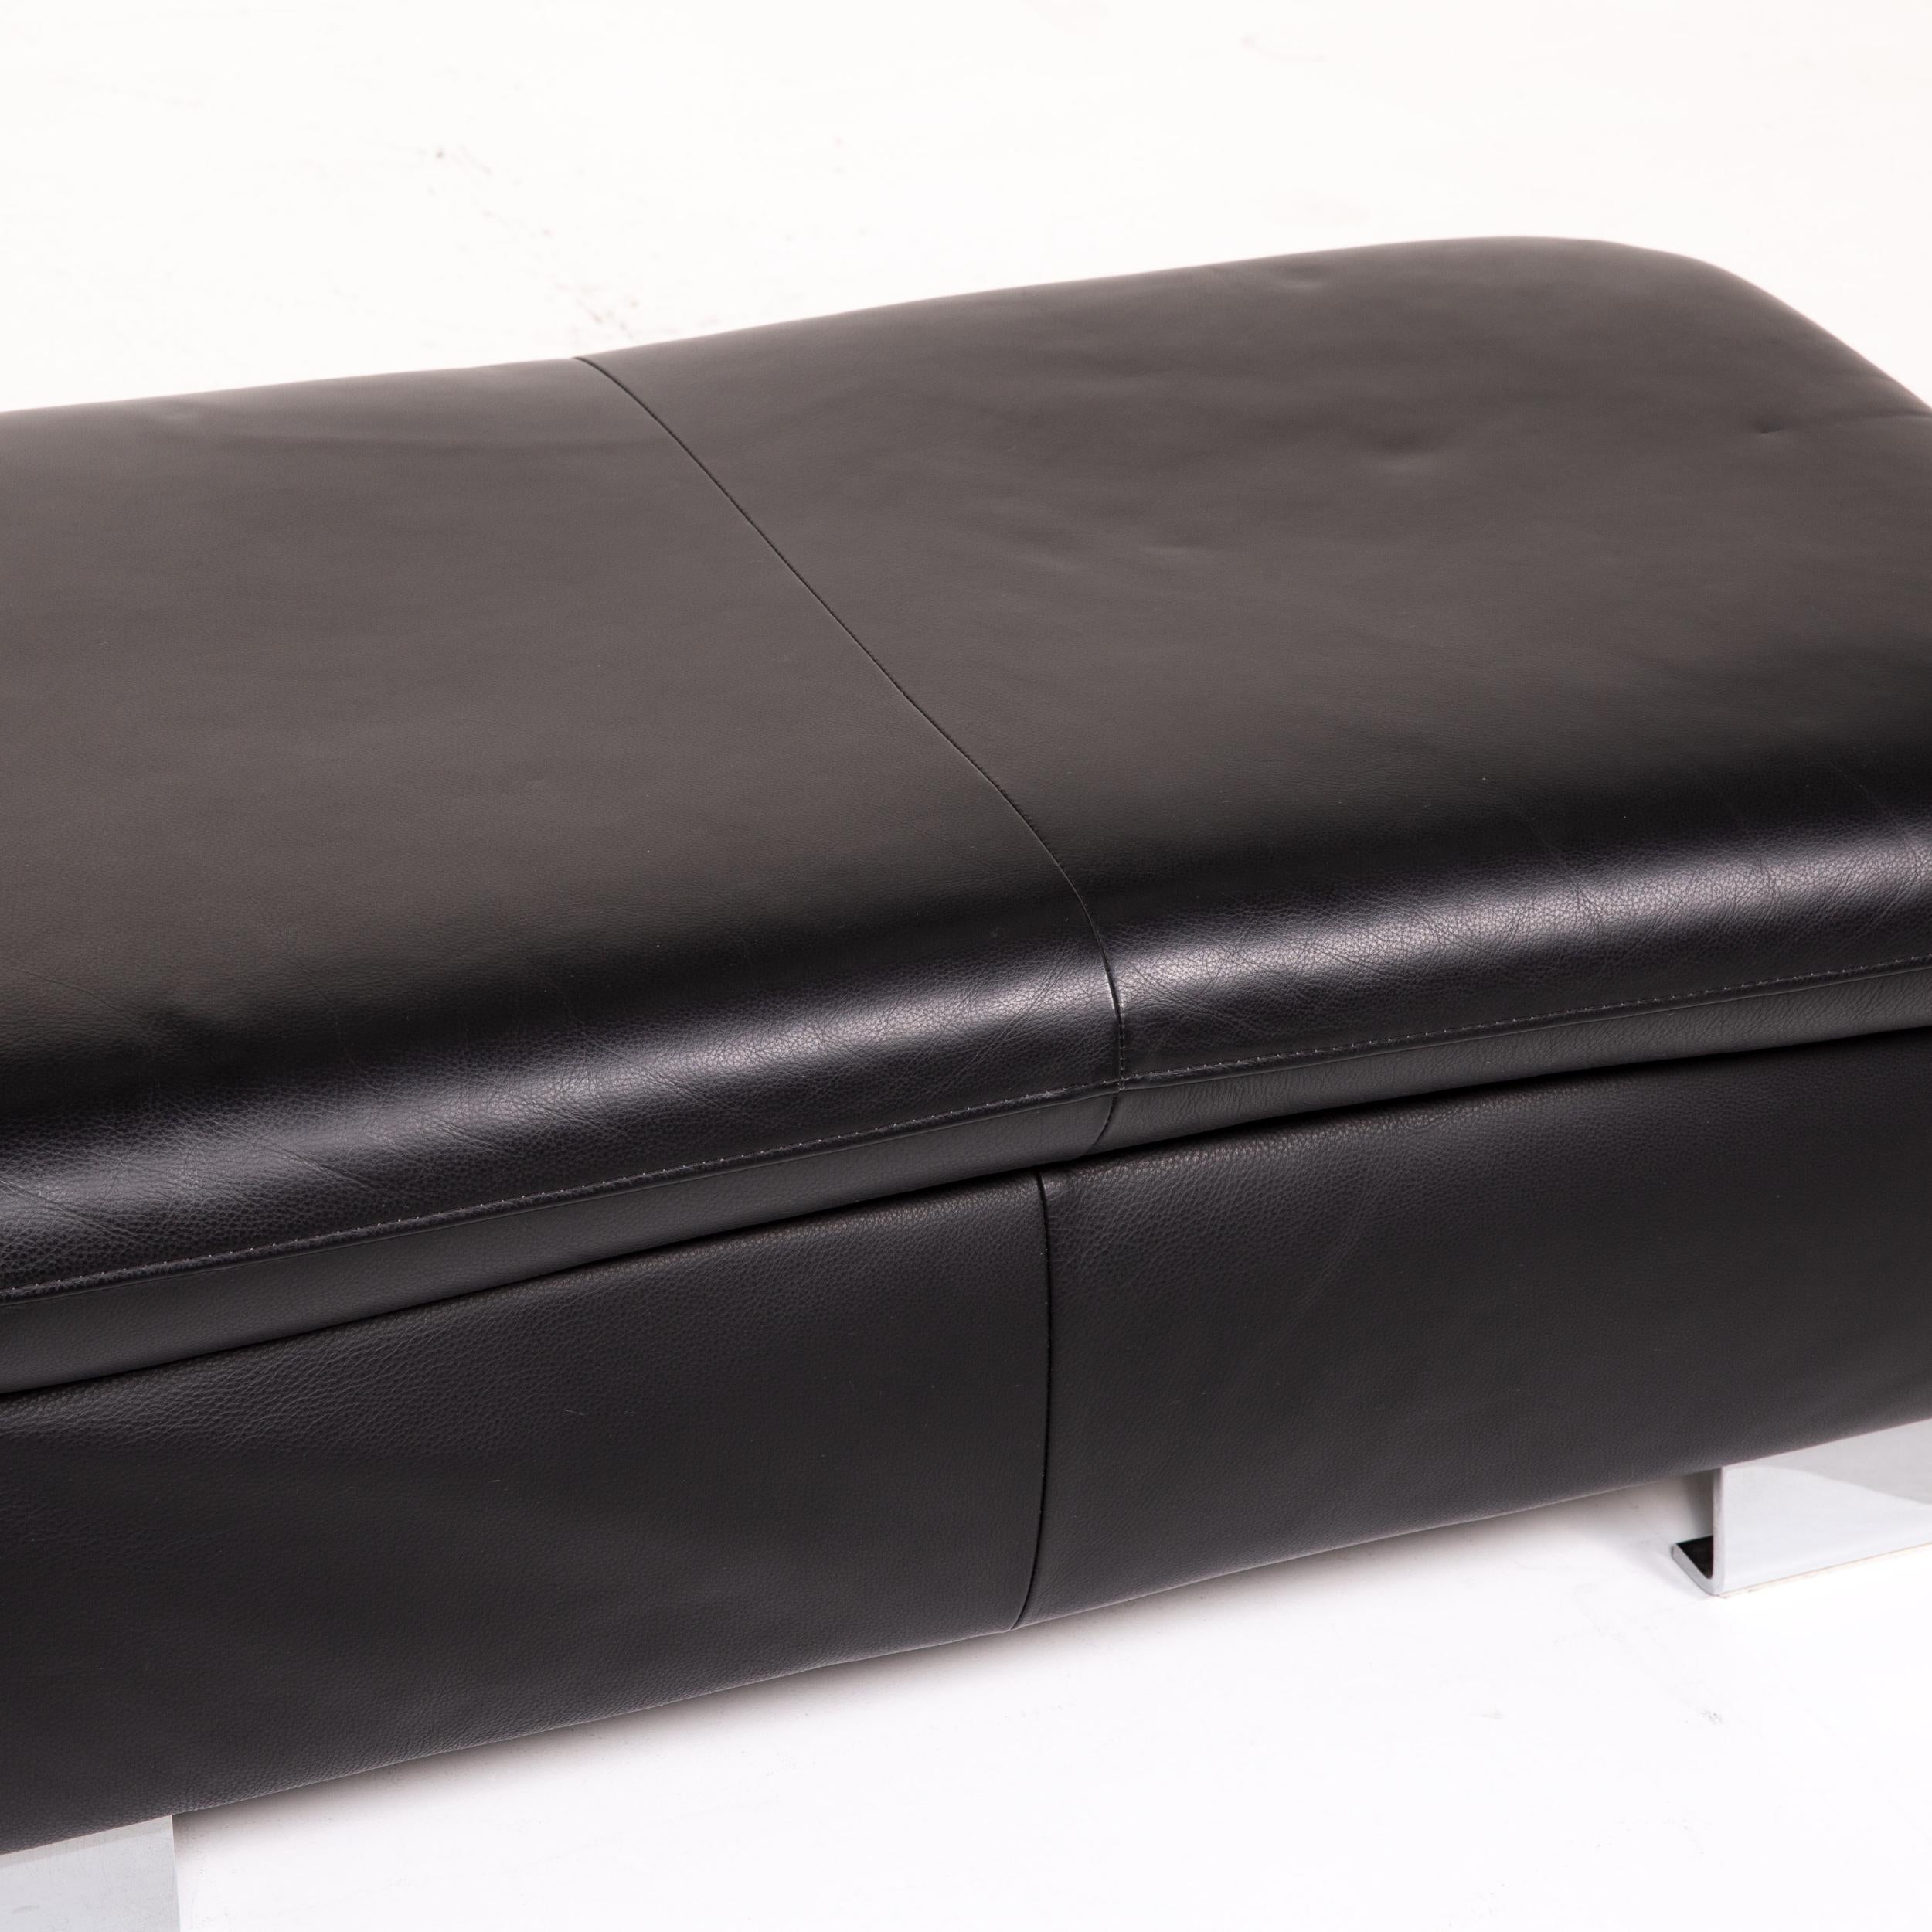 Mondo Leather Sofa Set Black 1 Corner Sofa 1 Stool Sleep Function In Good Condition For Sale In Cologne, DE